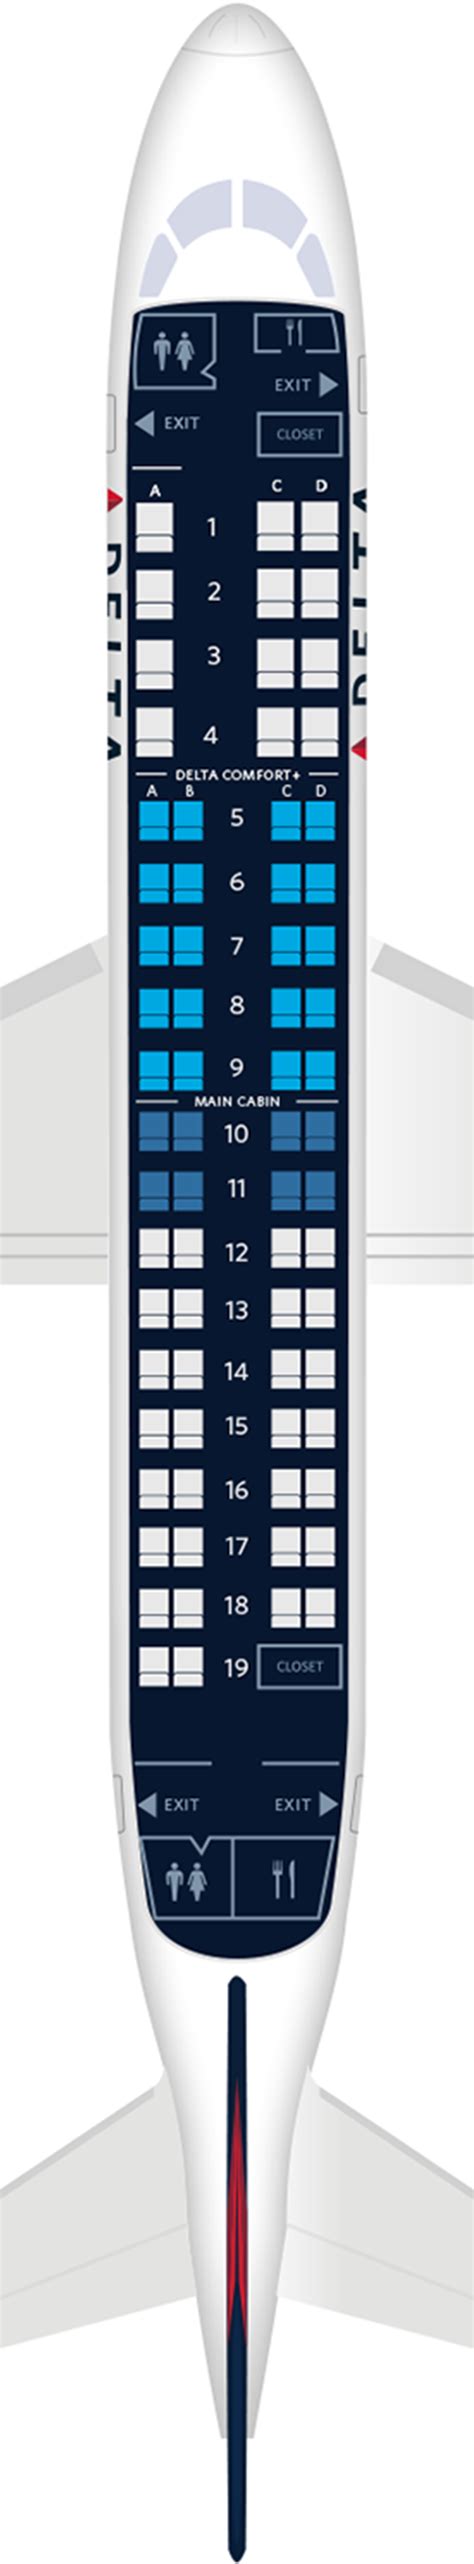 Embraer 175 Delta Seat Map